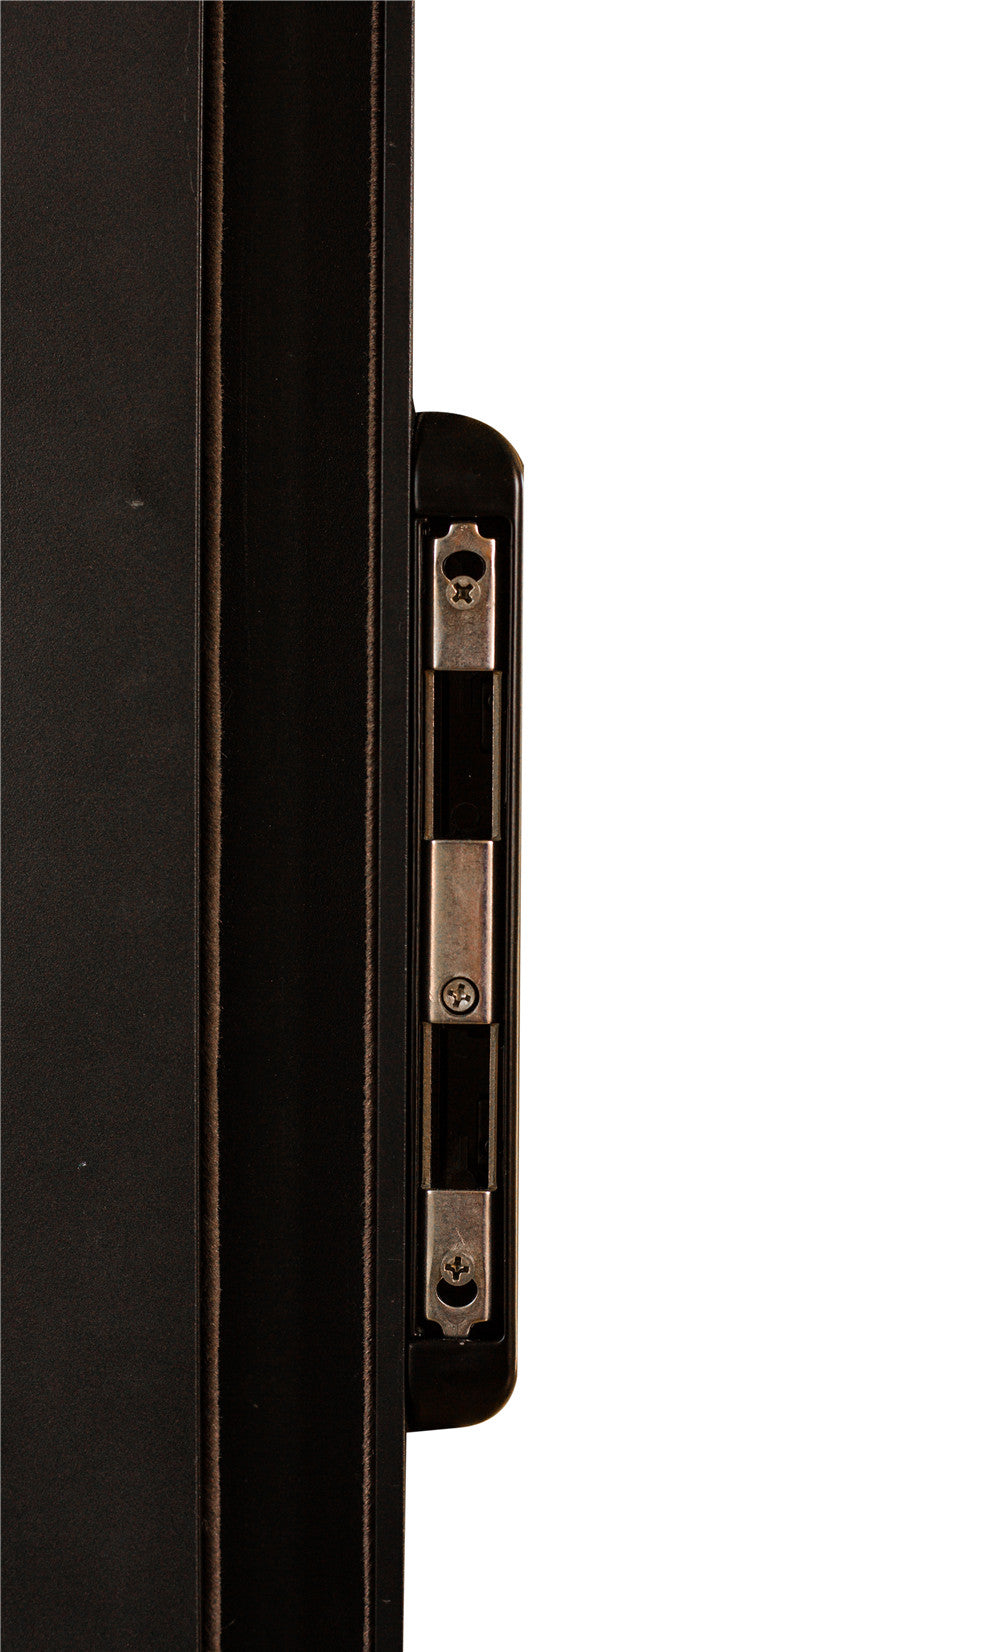 Sliding Stacker Door - 2110h X 4780w - 6 Panel - Double Glazed.